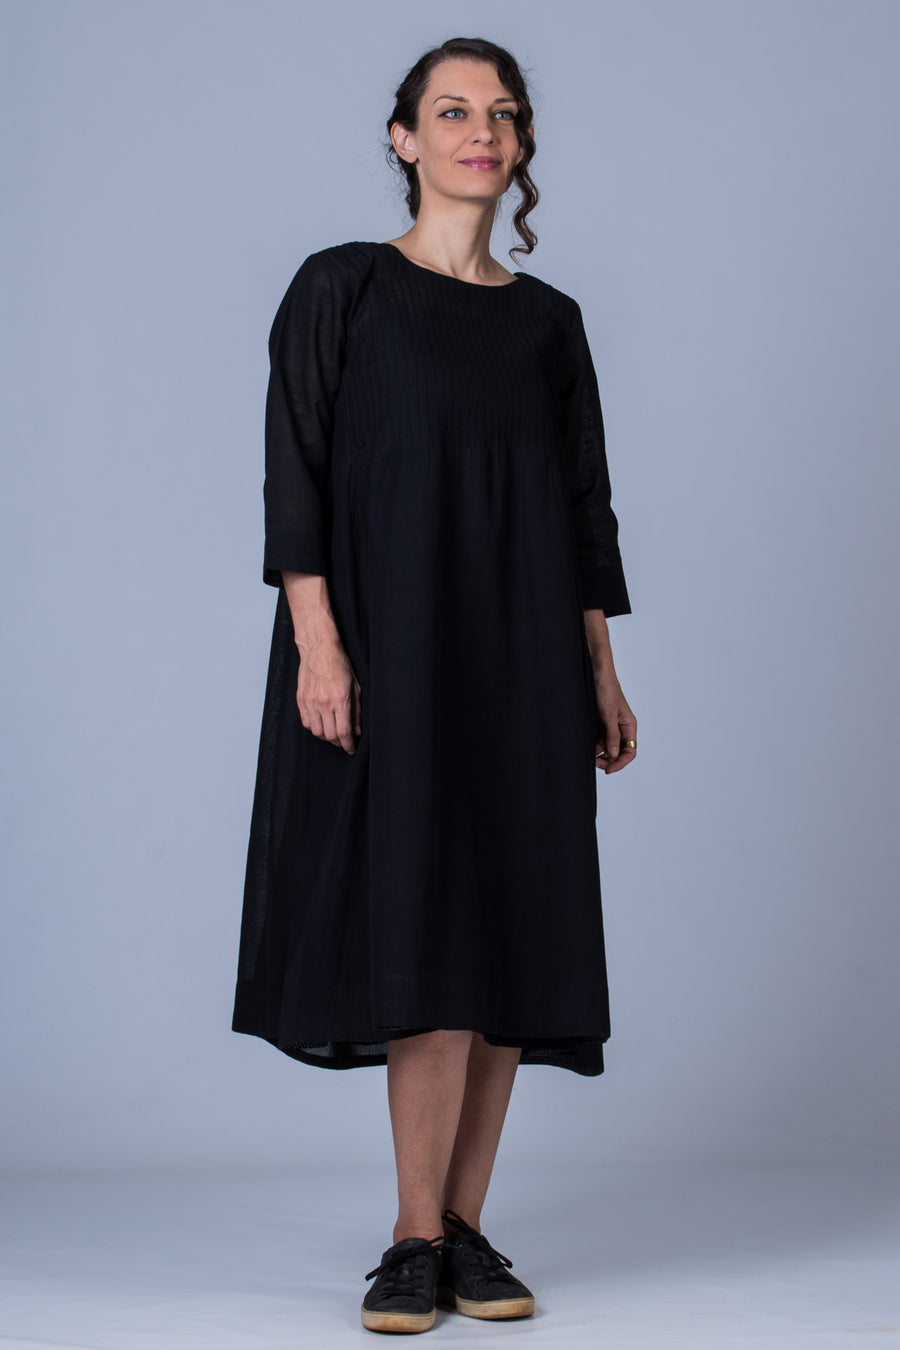 Black Mangalgiri Dress - UDUPU - Upasana Design Studio